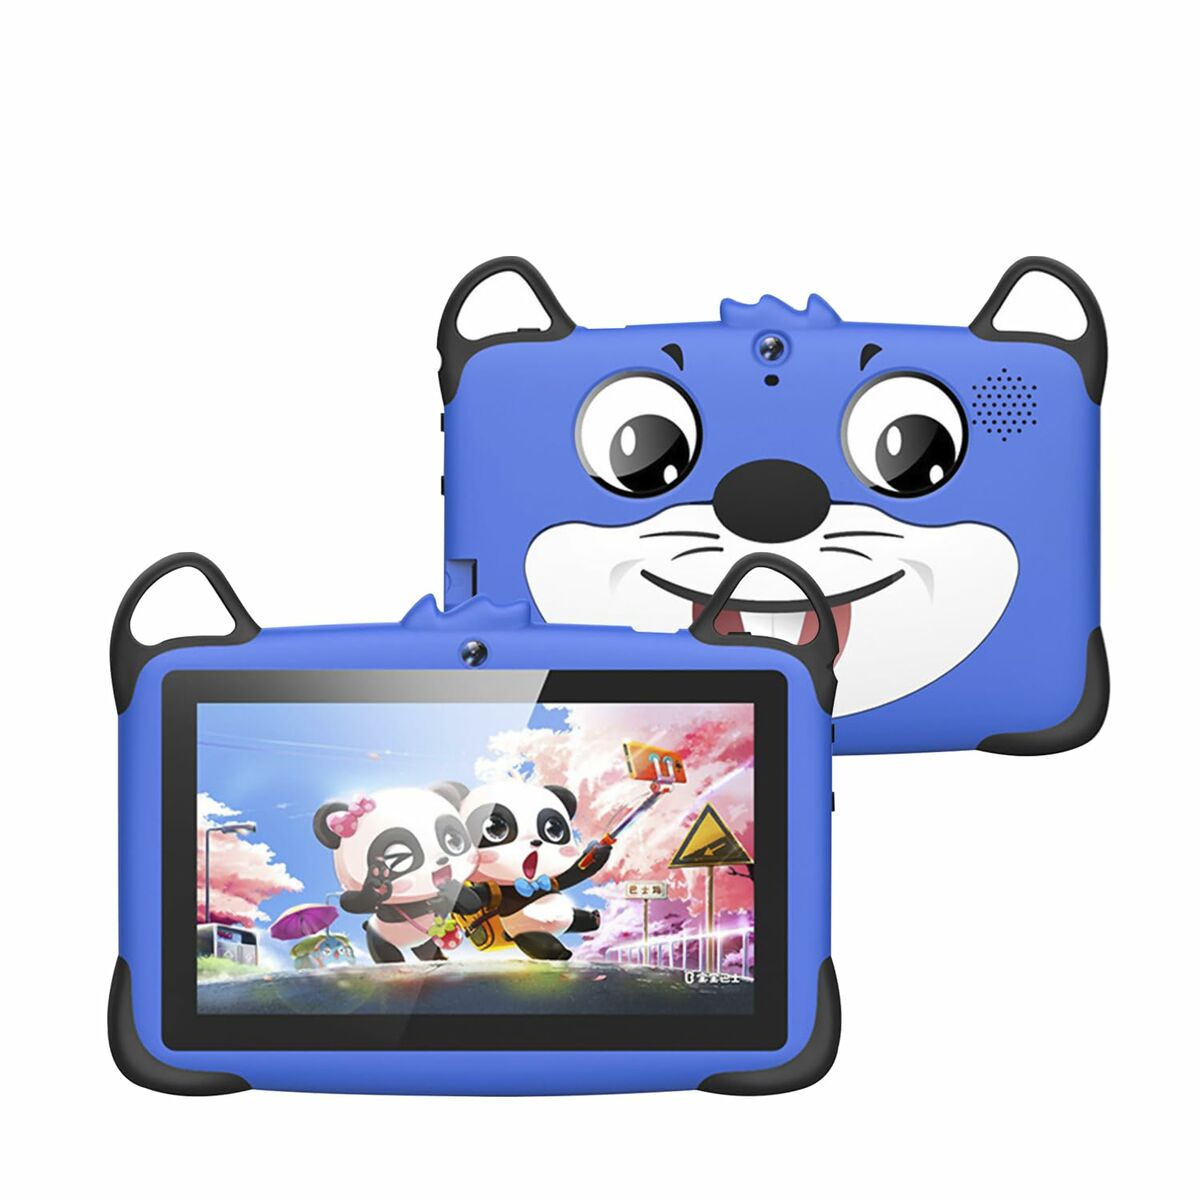 Interaktiv Tablet til Børn K717 1 GB RAM